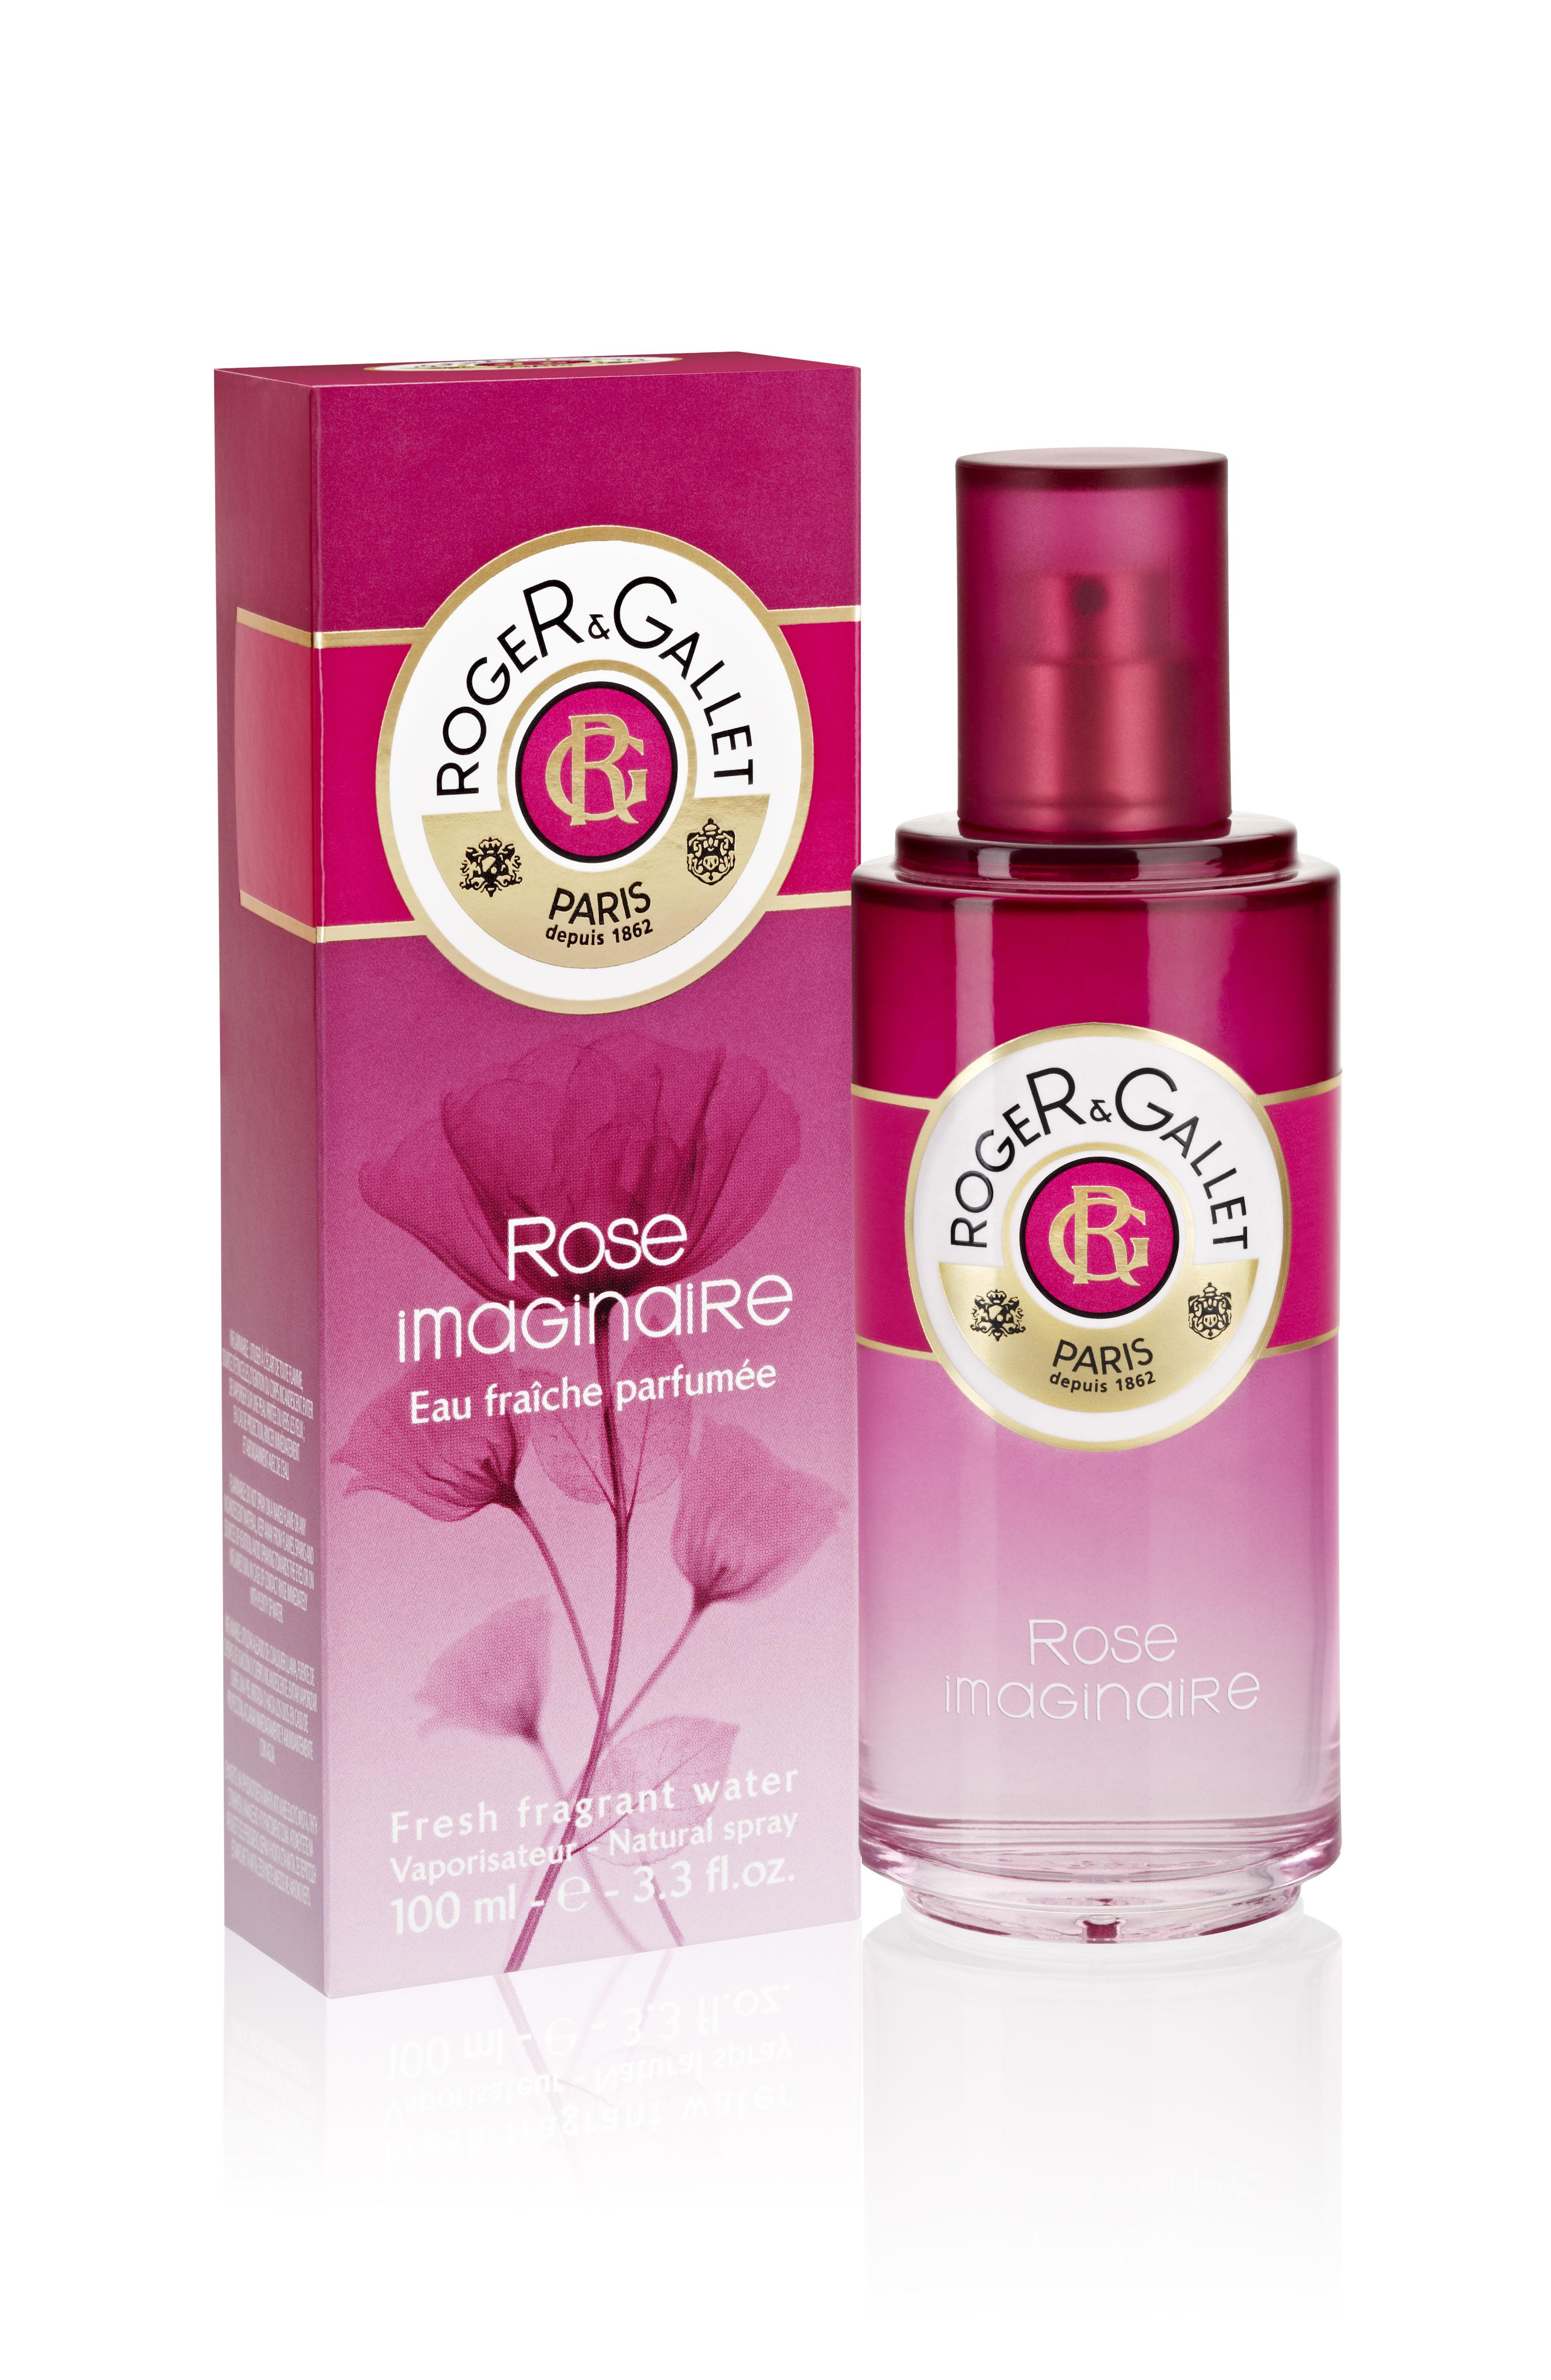 Roger & Gallet Rose Imaginaire parfum - €41.70